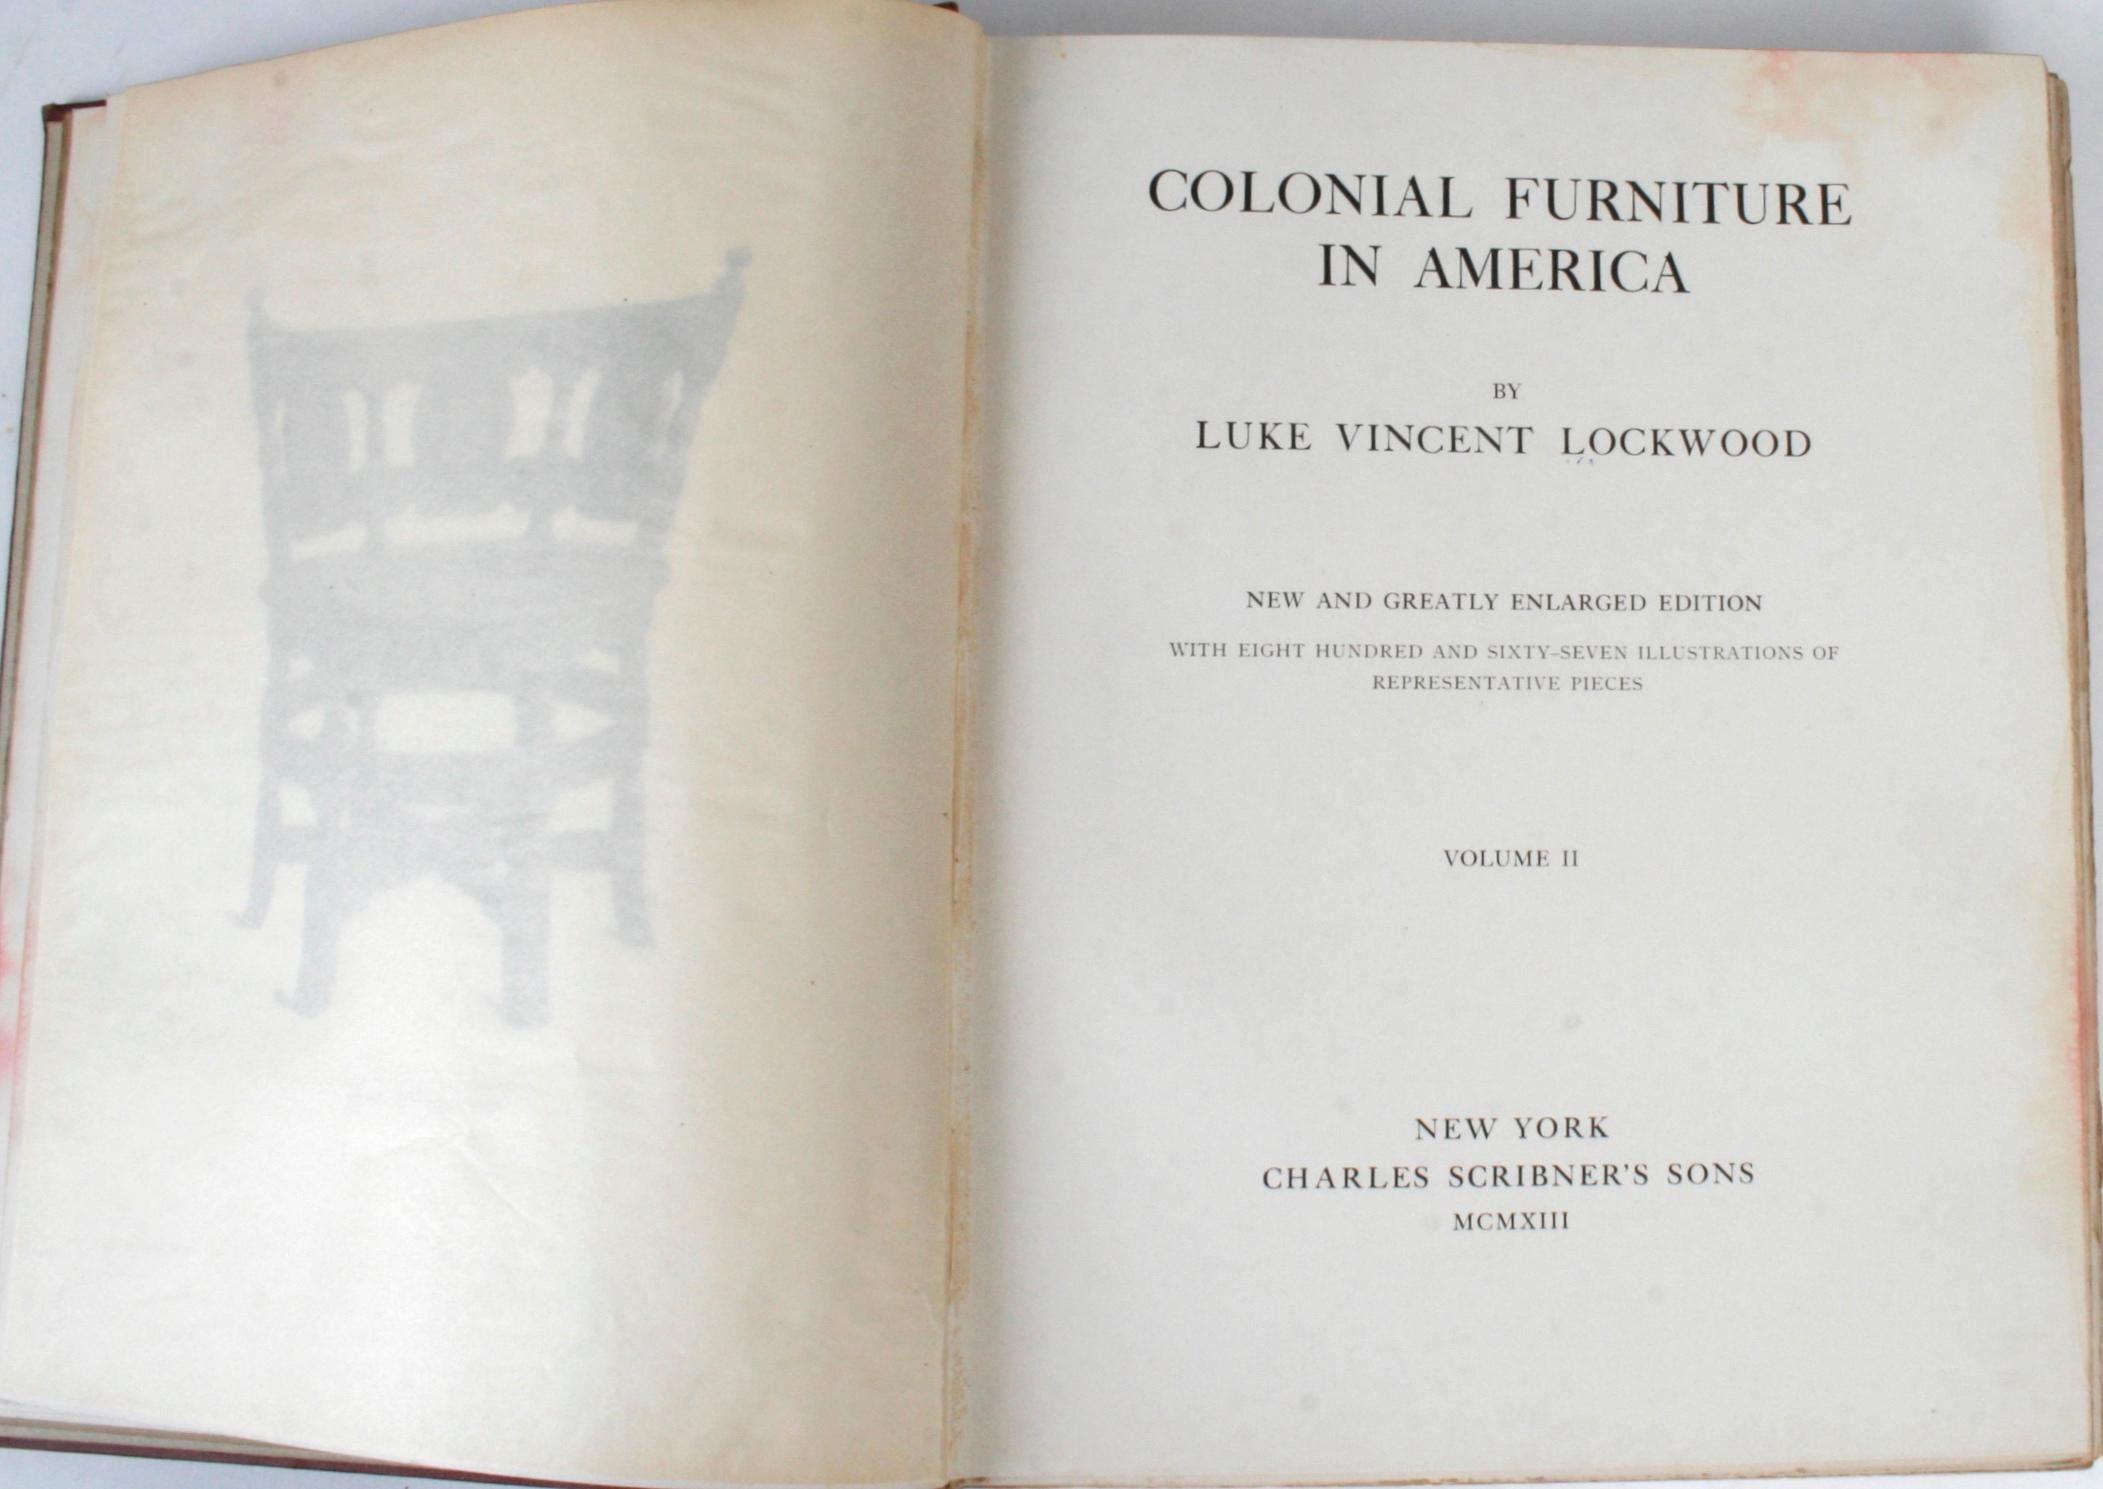 Colonial Furniture in America by Luke Vincent Lockwood, Volumes I & II 1